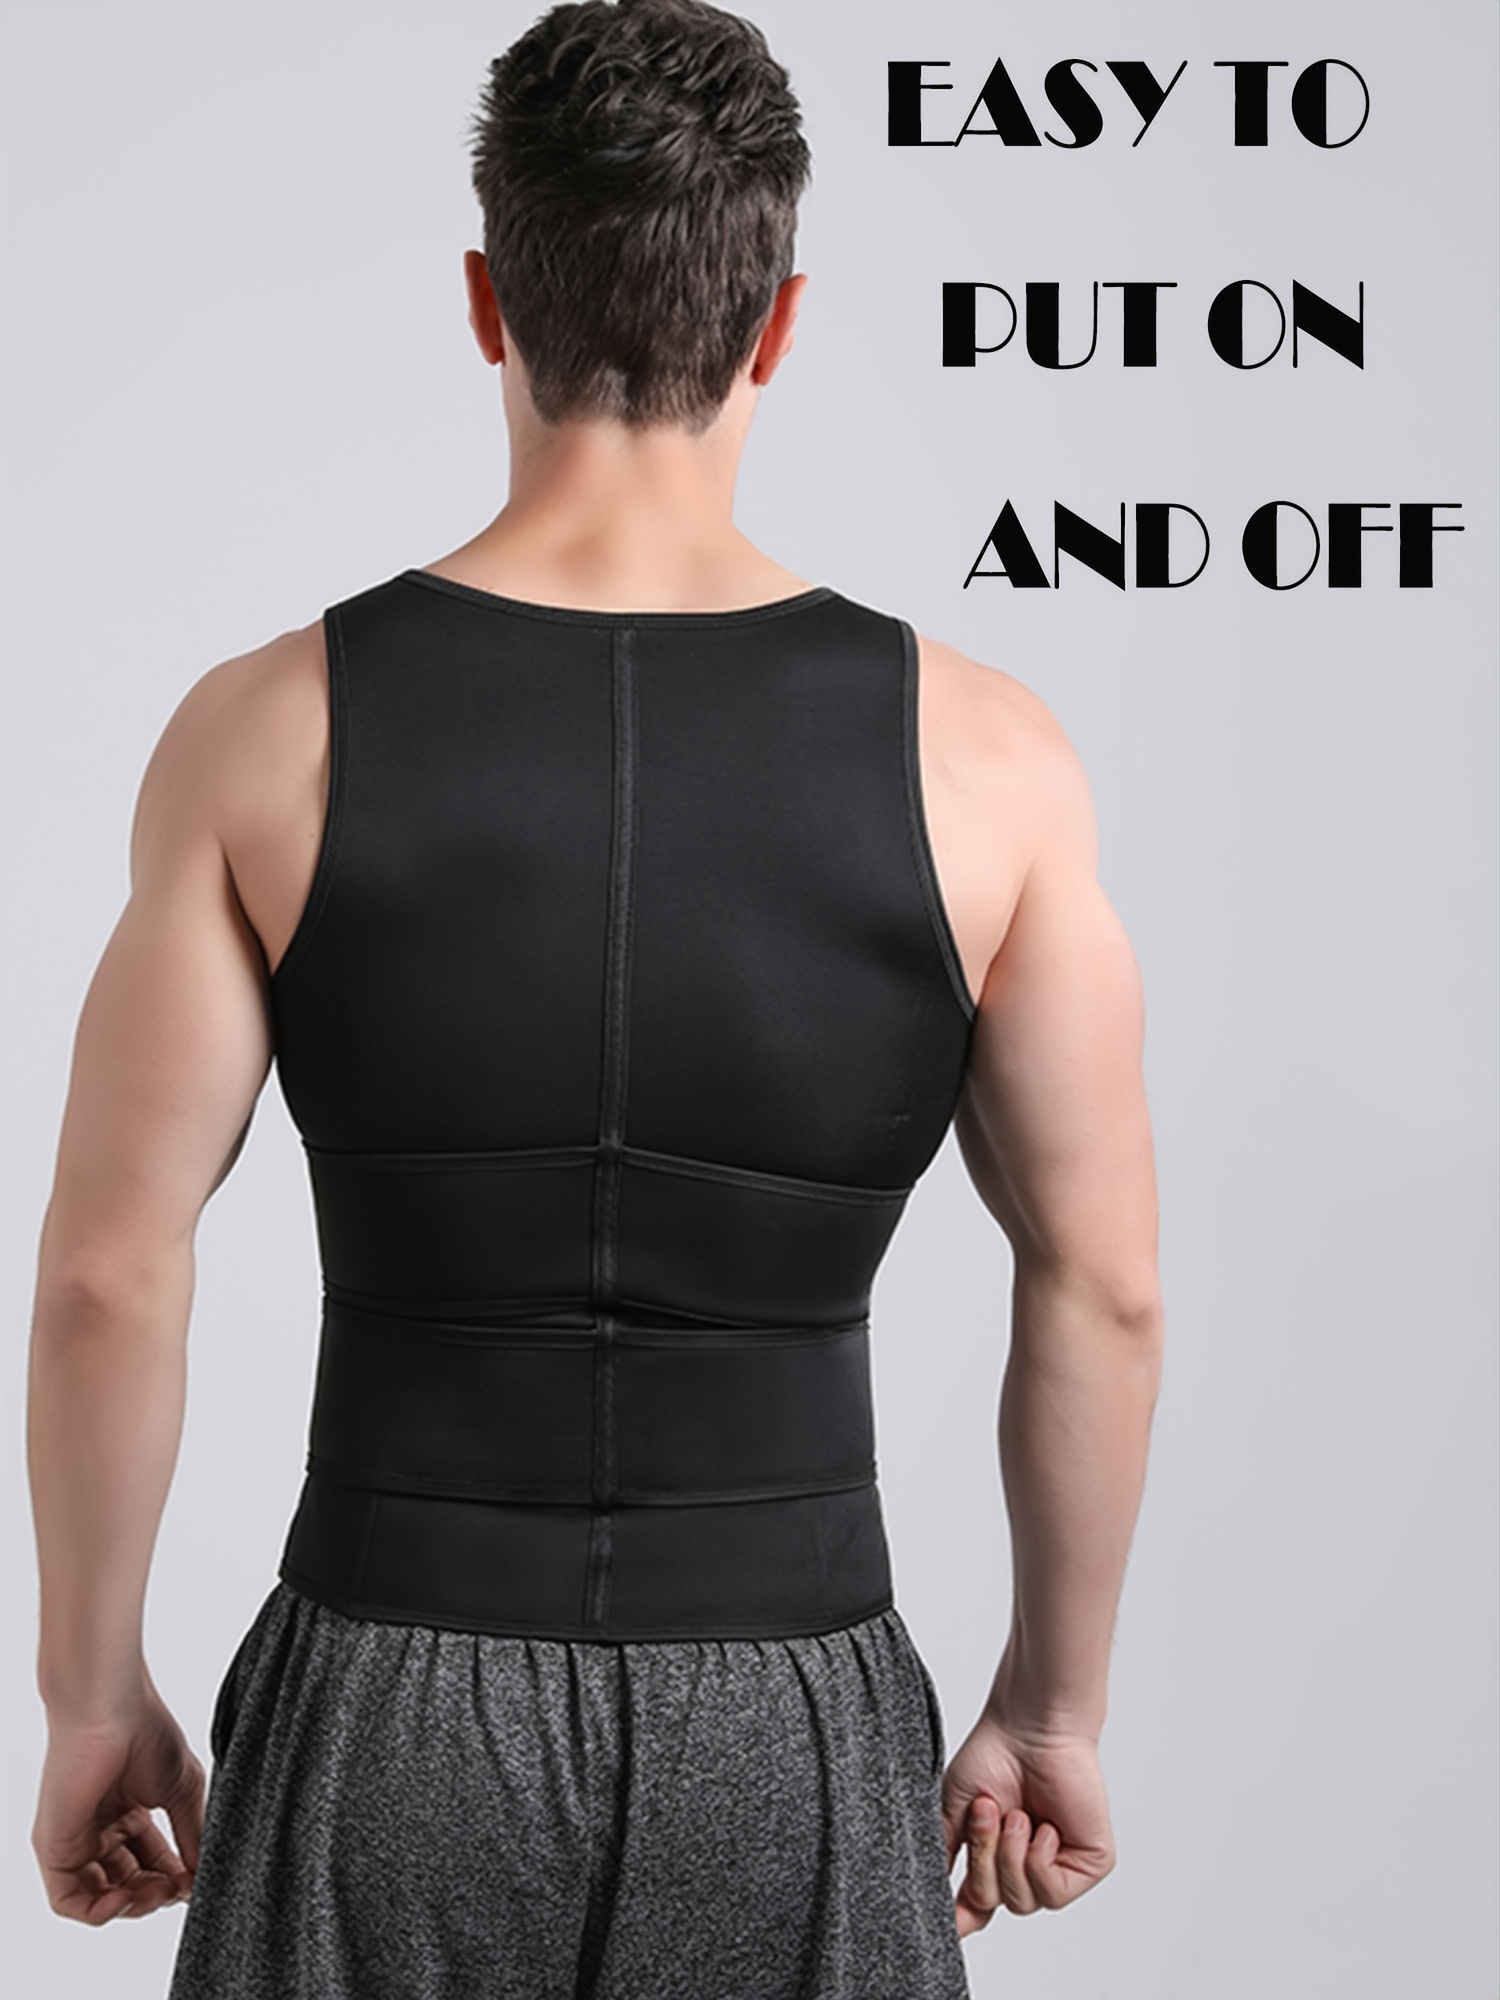 Mayboom Mens Waist Trainer Sauna Vest for Men Weight Loss Body Shaper Sweat  Vest for Men Faja Para Hombre Plus Size, Black Two Belt, Medium :  : Sports & Outdoors